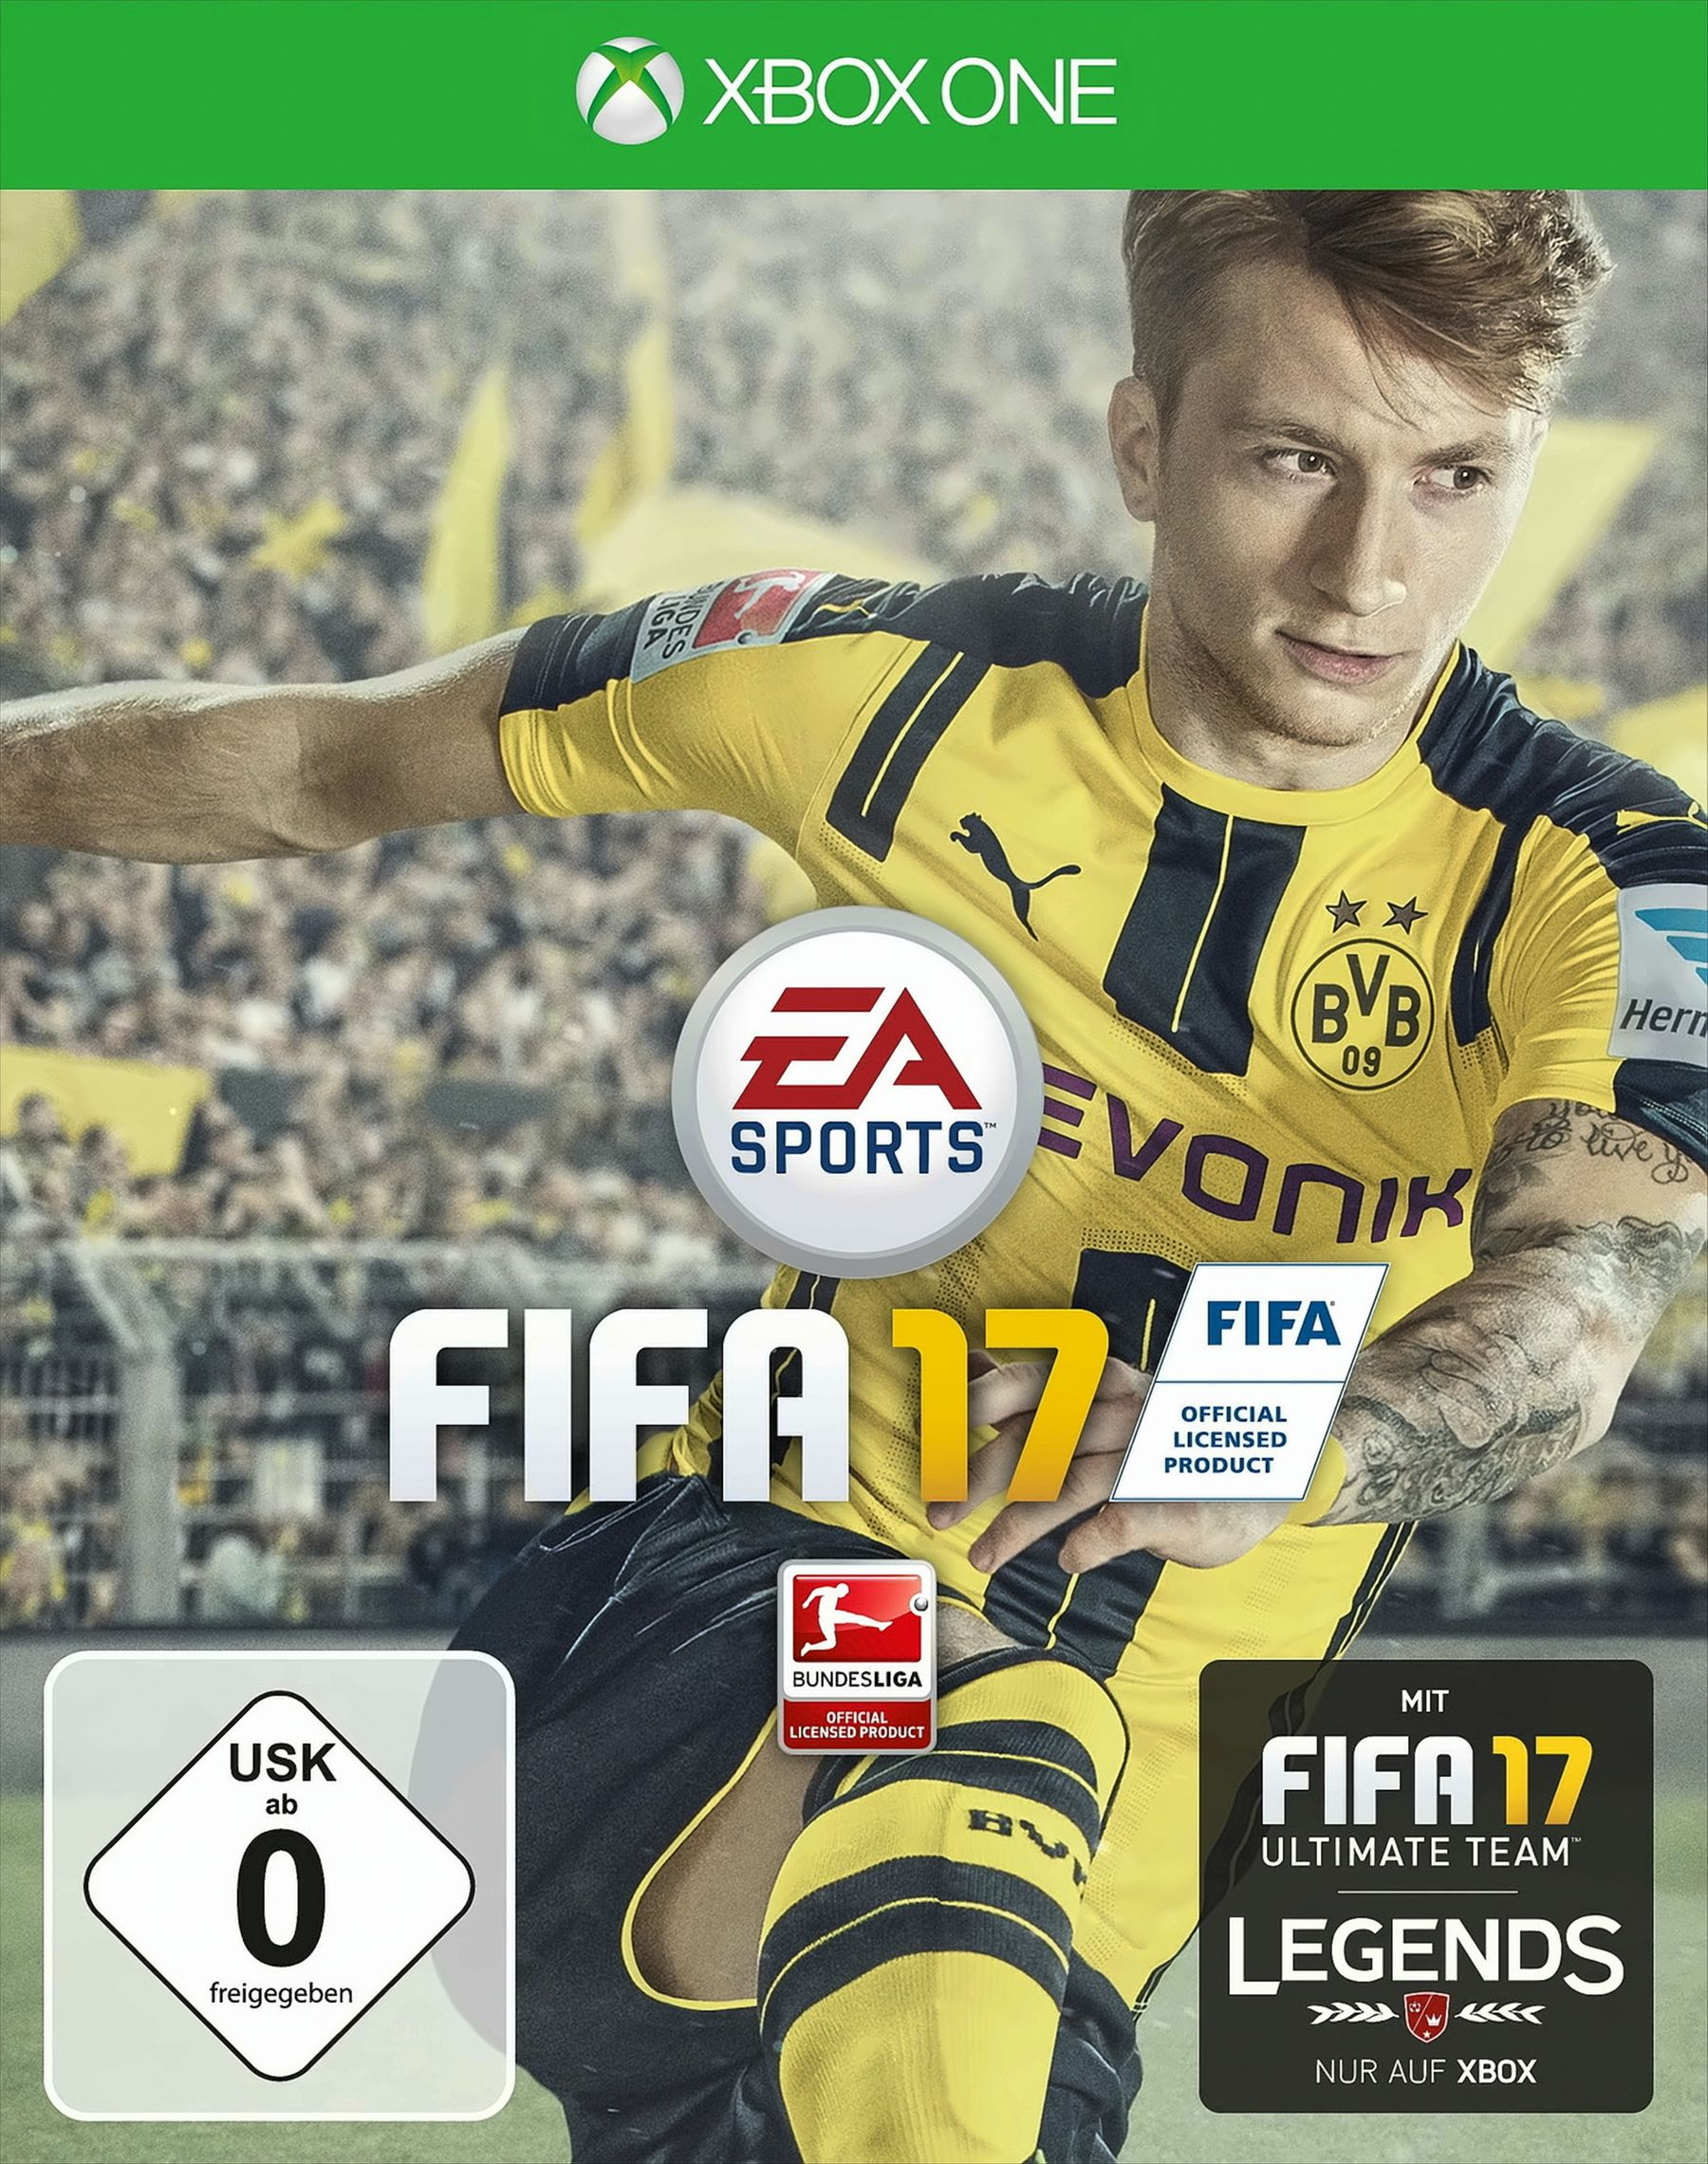 FIFA 17 - One] [Xbox